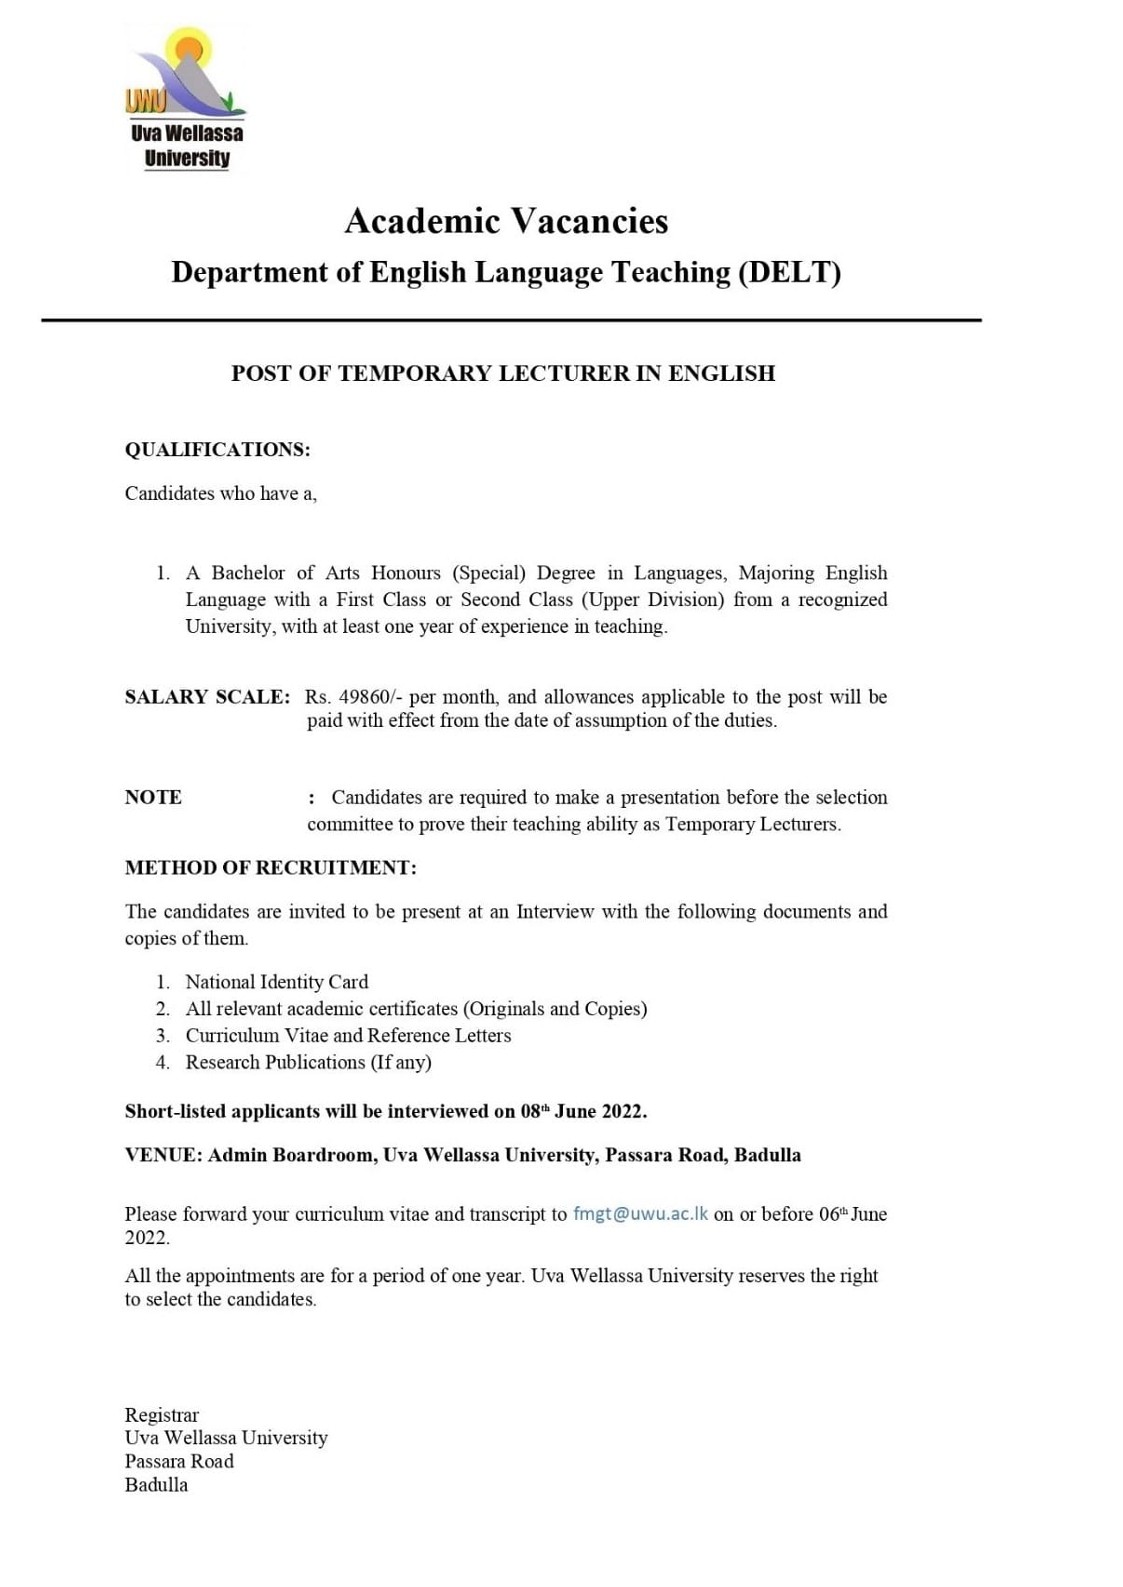 Temporary Lecturer (English) Vacancies - Uva Wellassa University Jobs Vacancies